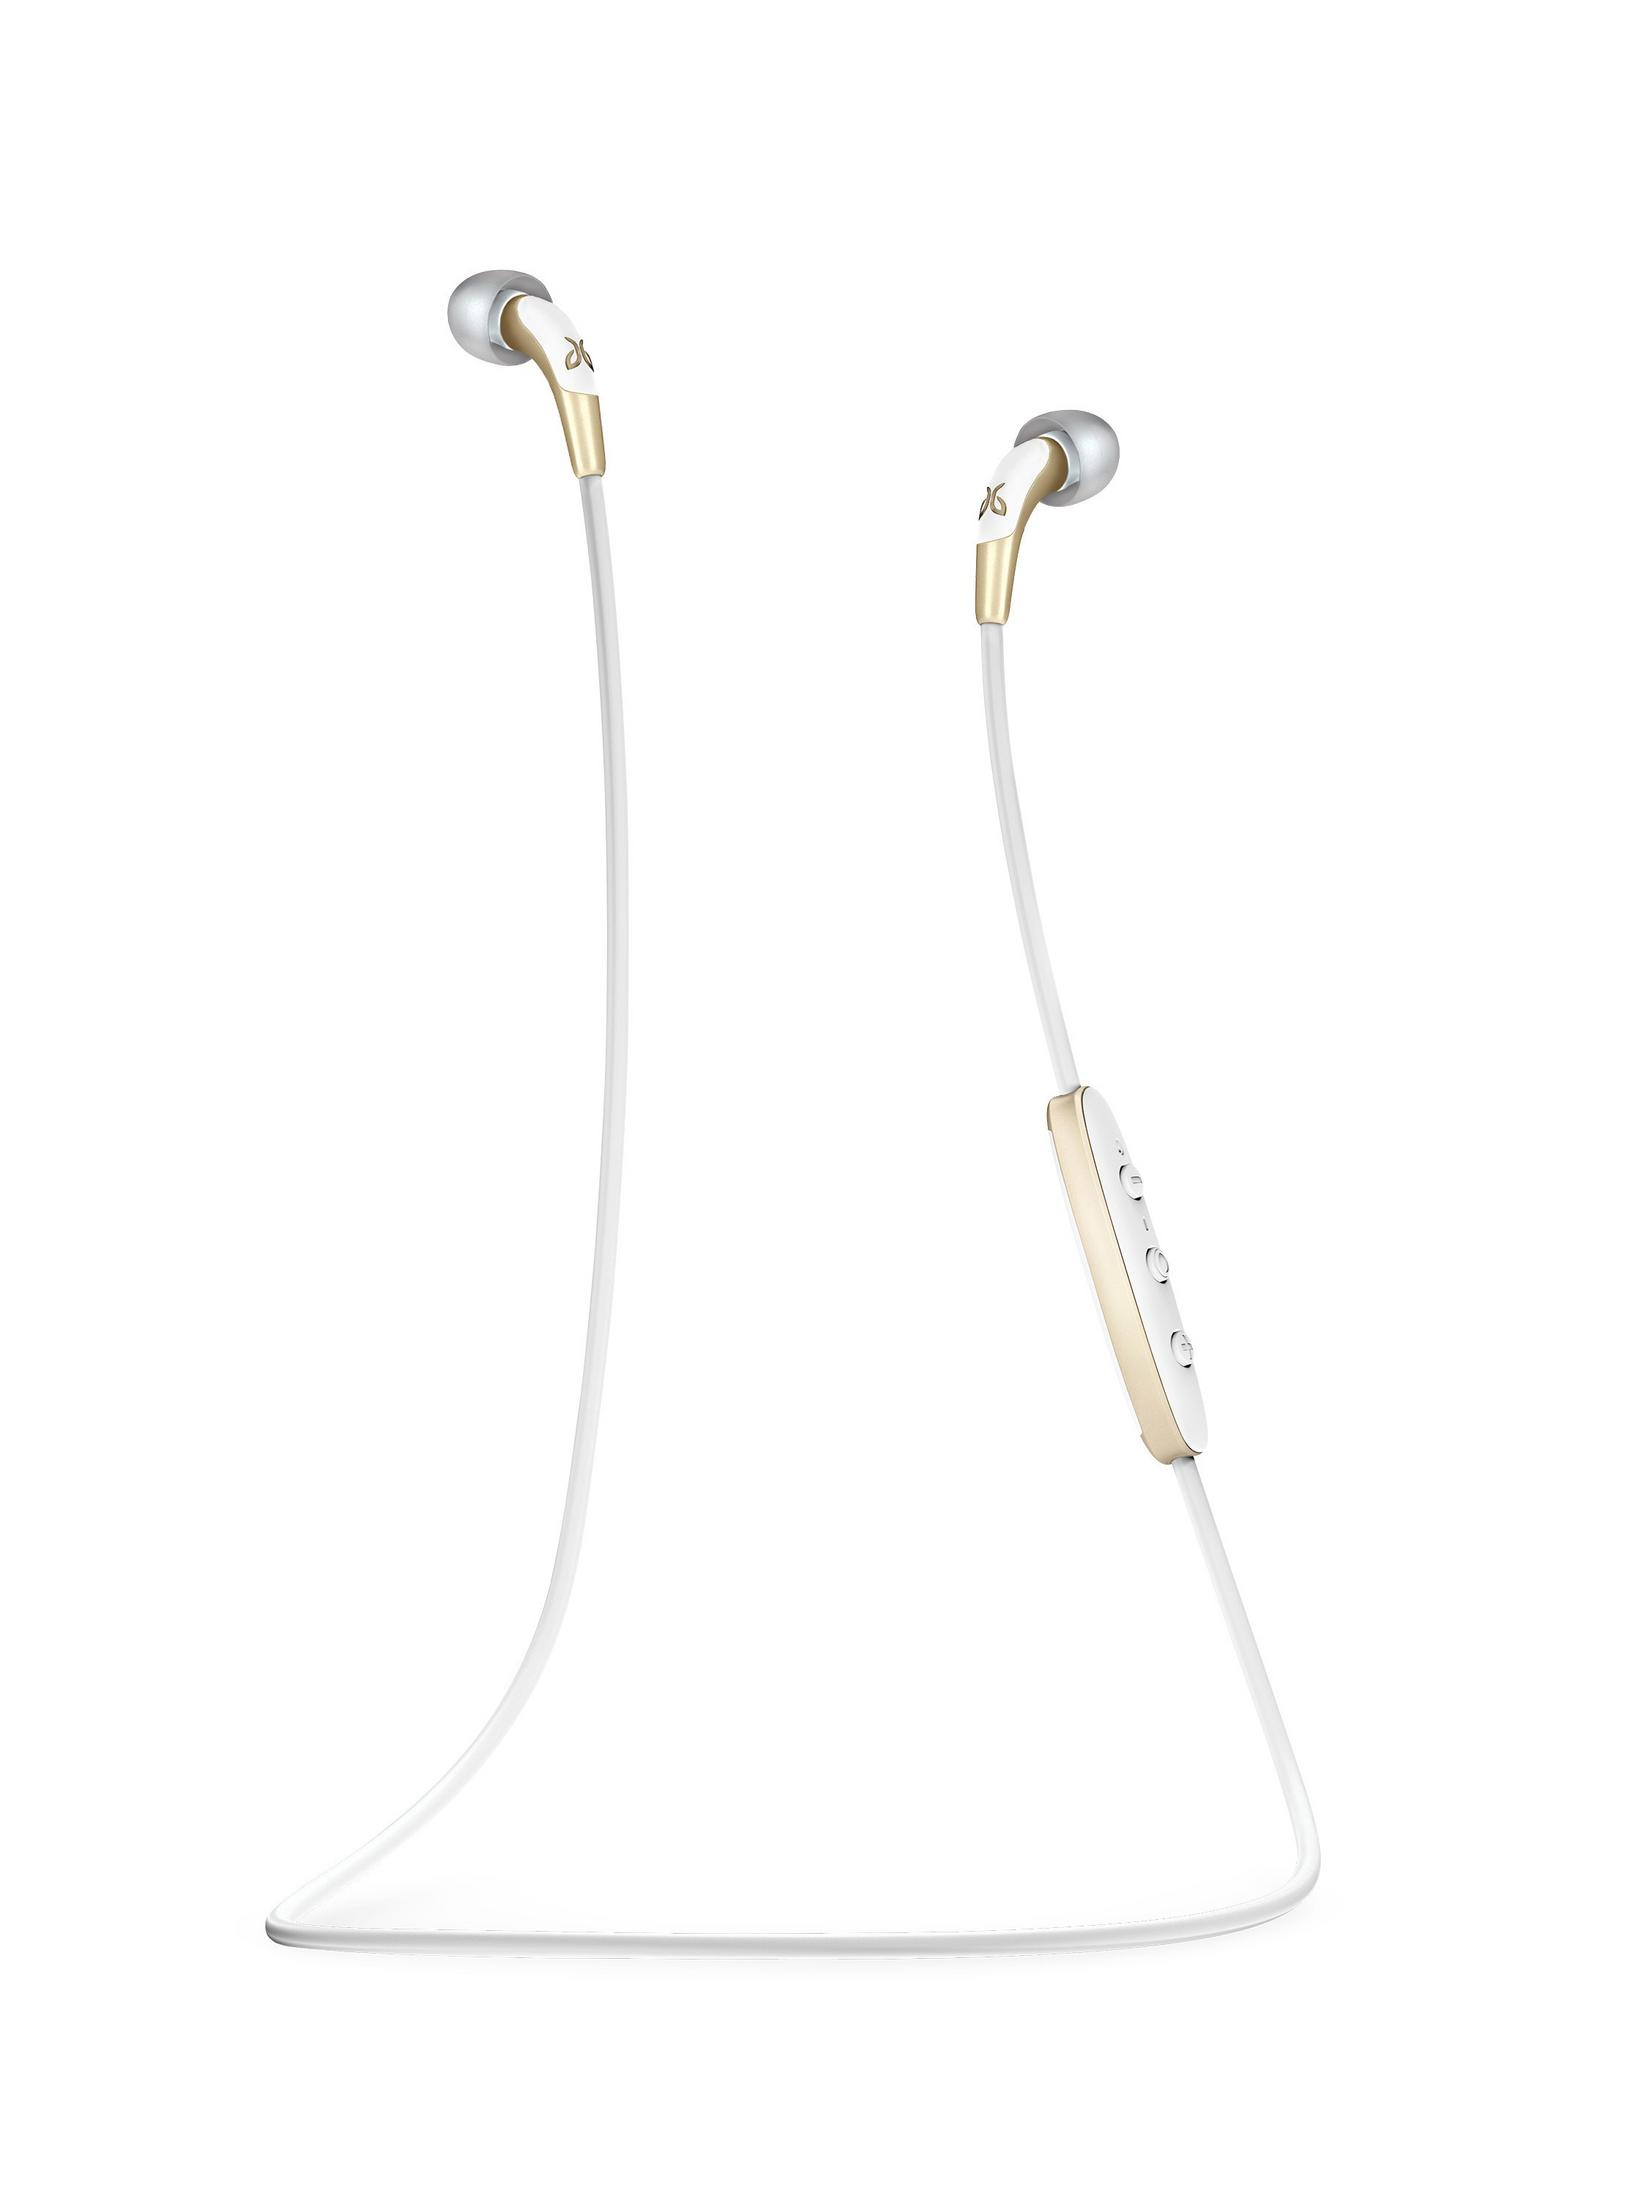 FREEDOM Gold In-ear Bluetooth F5-S-G-EMEA JAYBIRD Kopfhörer GOLD,